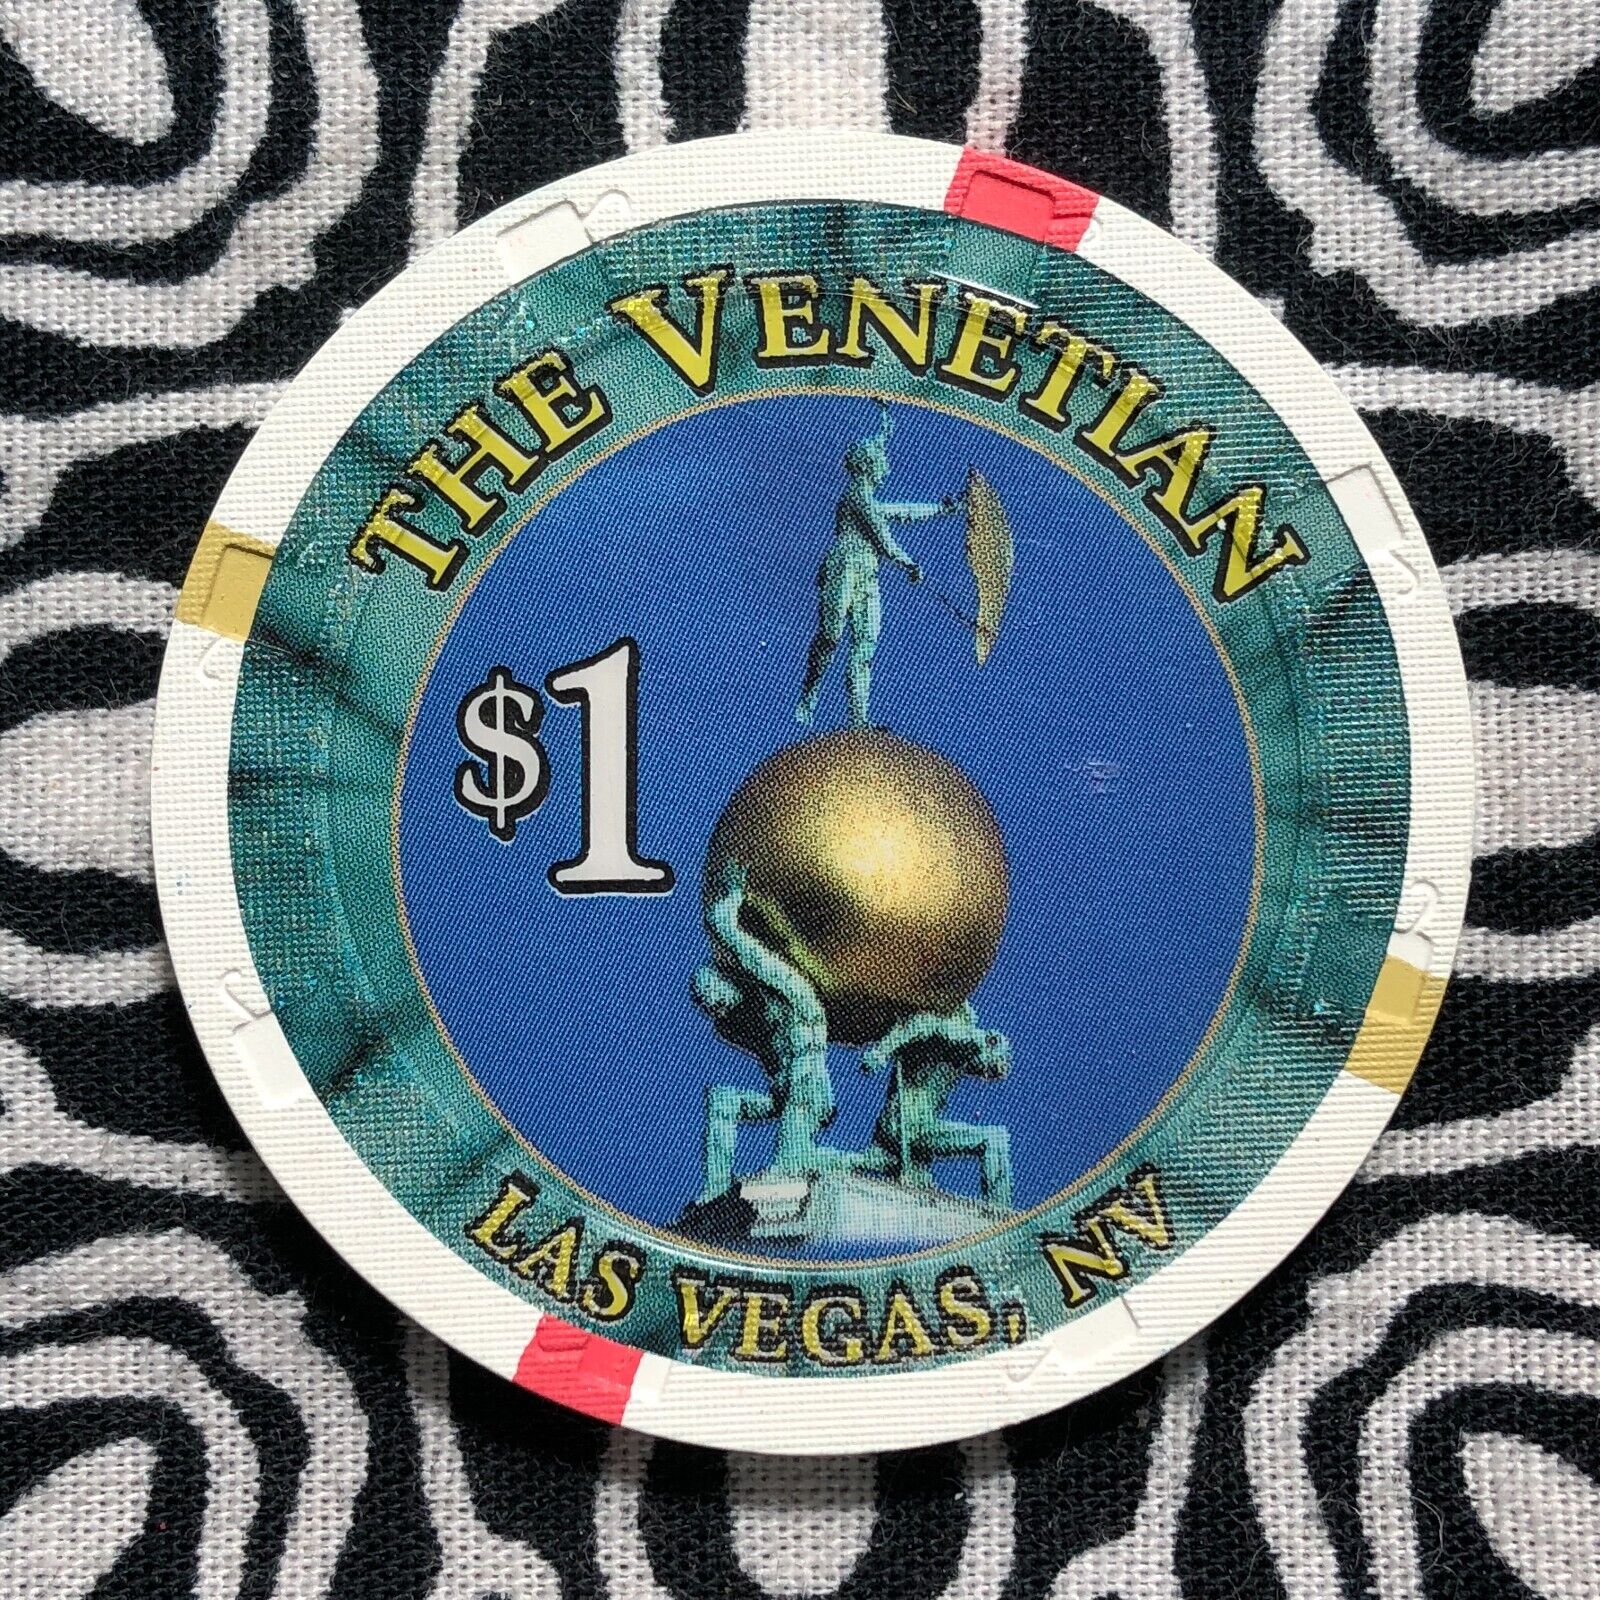 The Venetian $1 Las Vegas, Nevada Gaming Poker Casino Chip KQ14